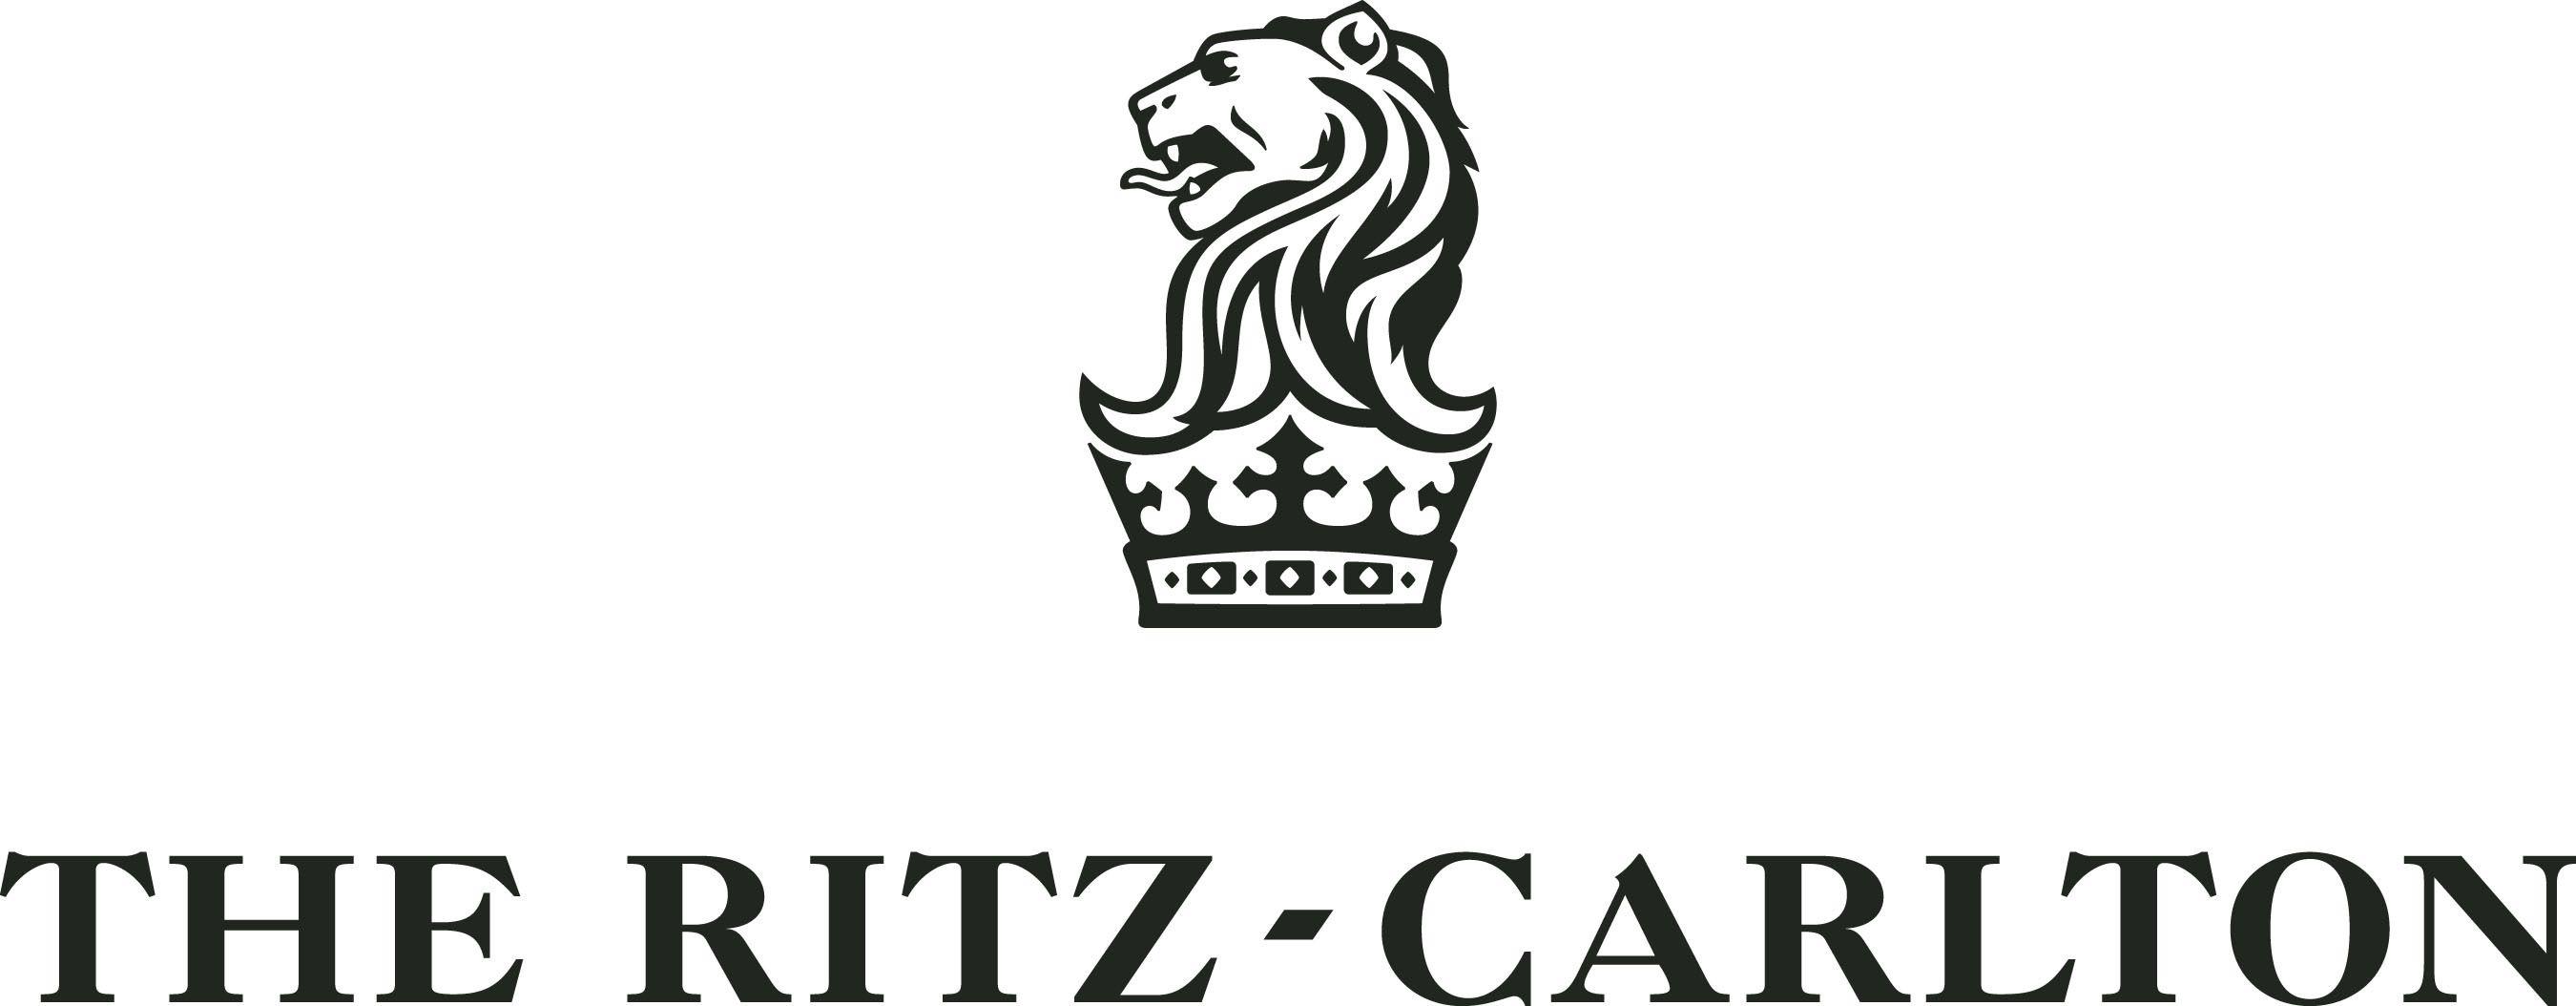 Ritz-Carlton Logo - The Ritz-Carlton Hotel Company Launches New Brand Voice